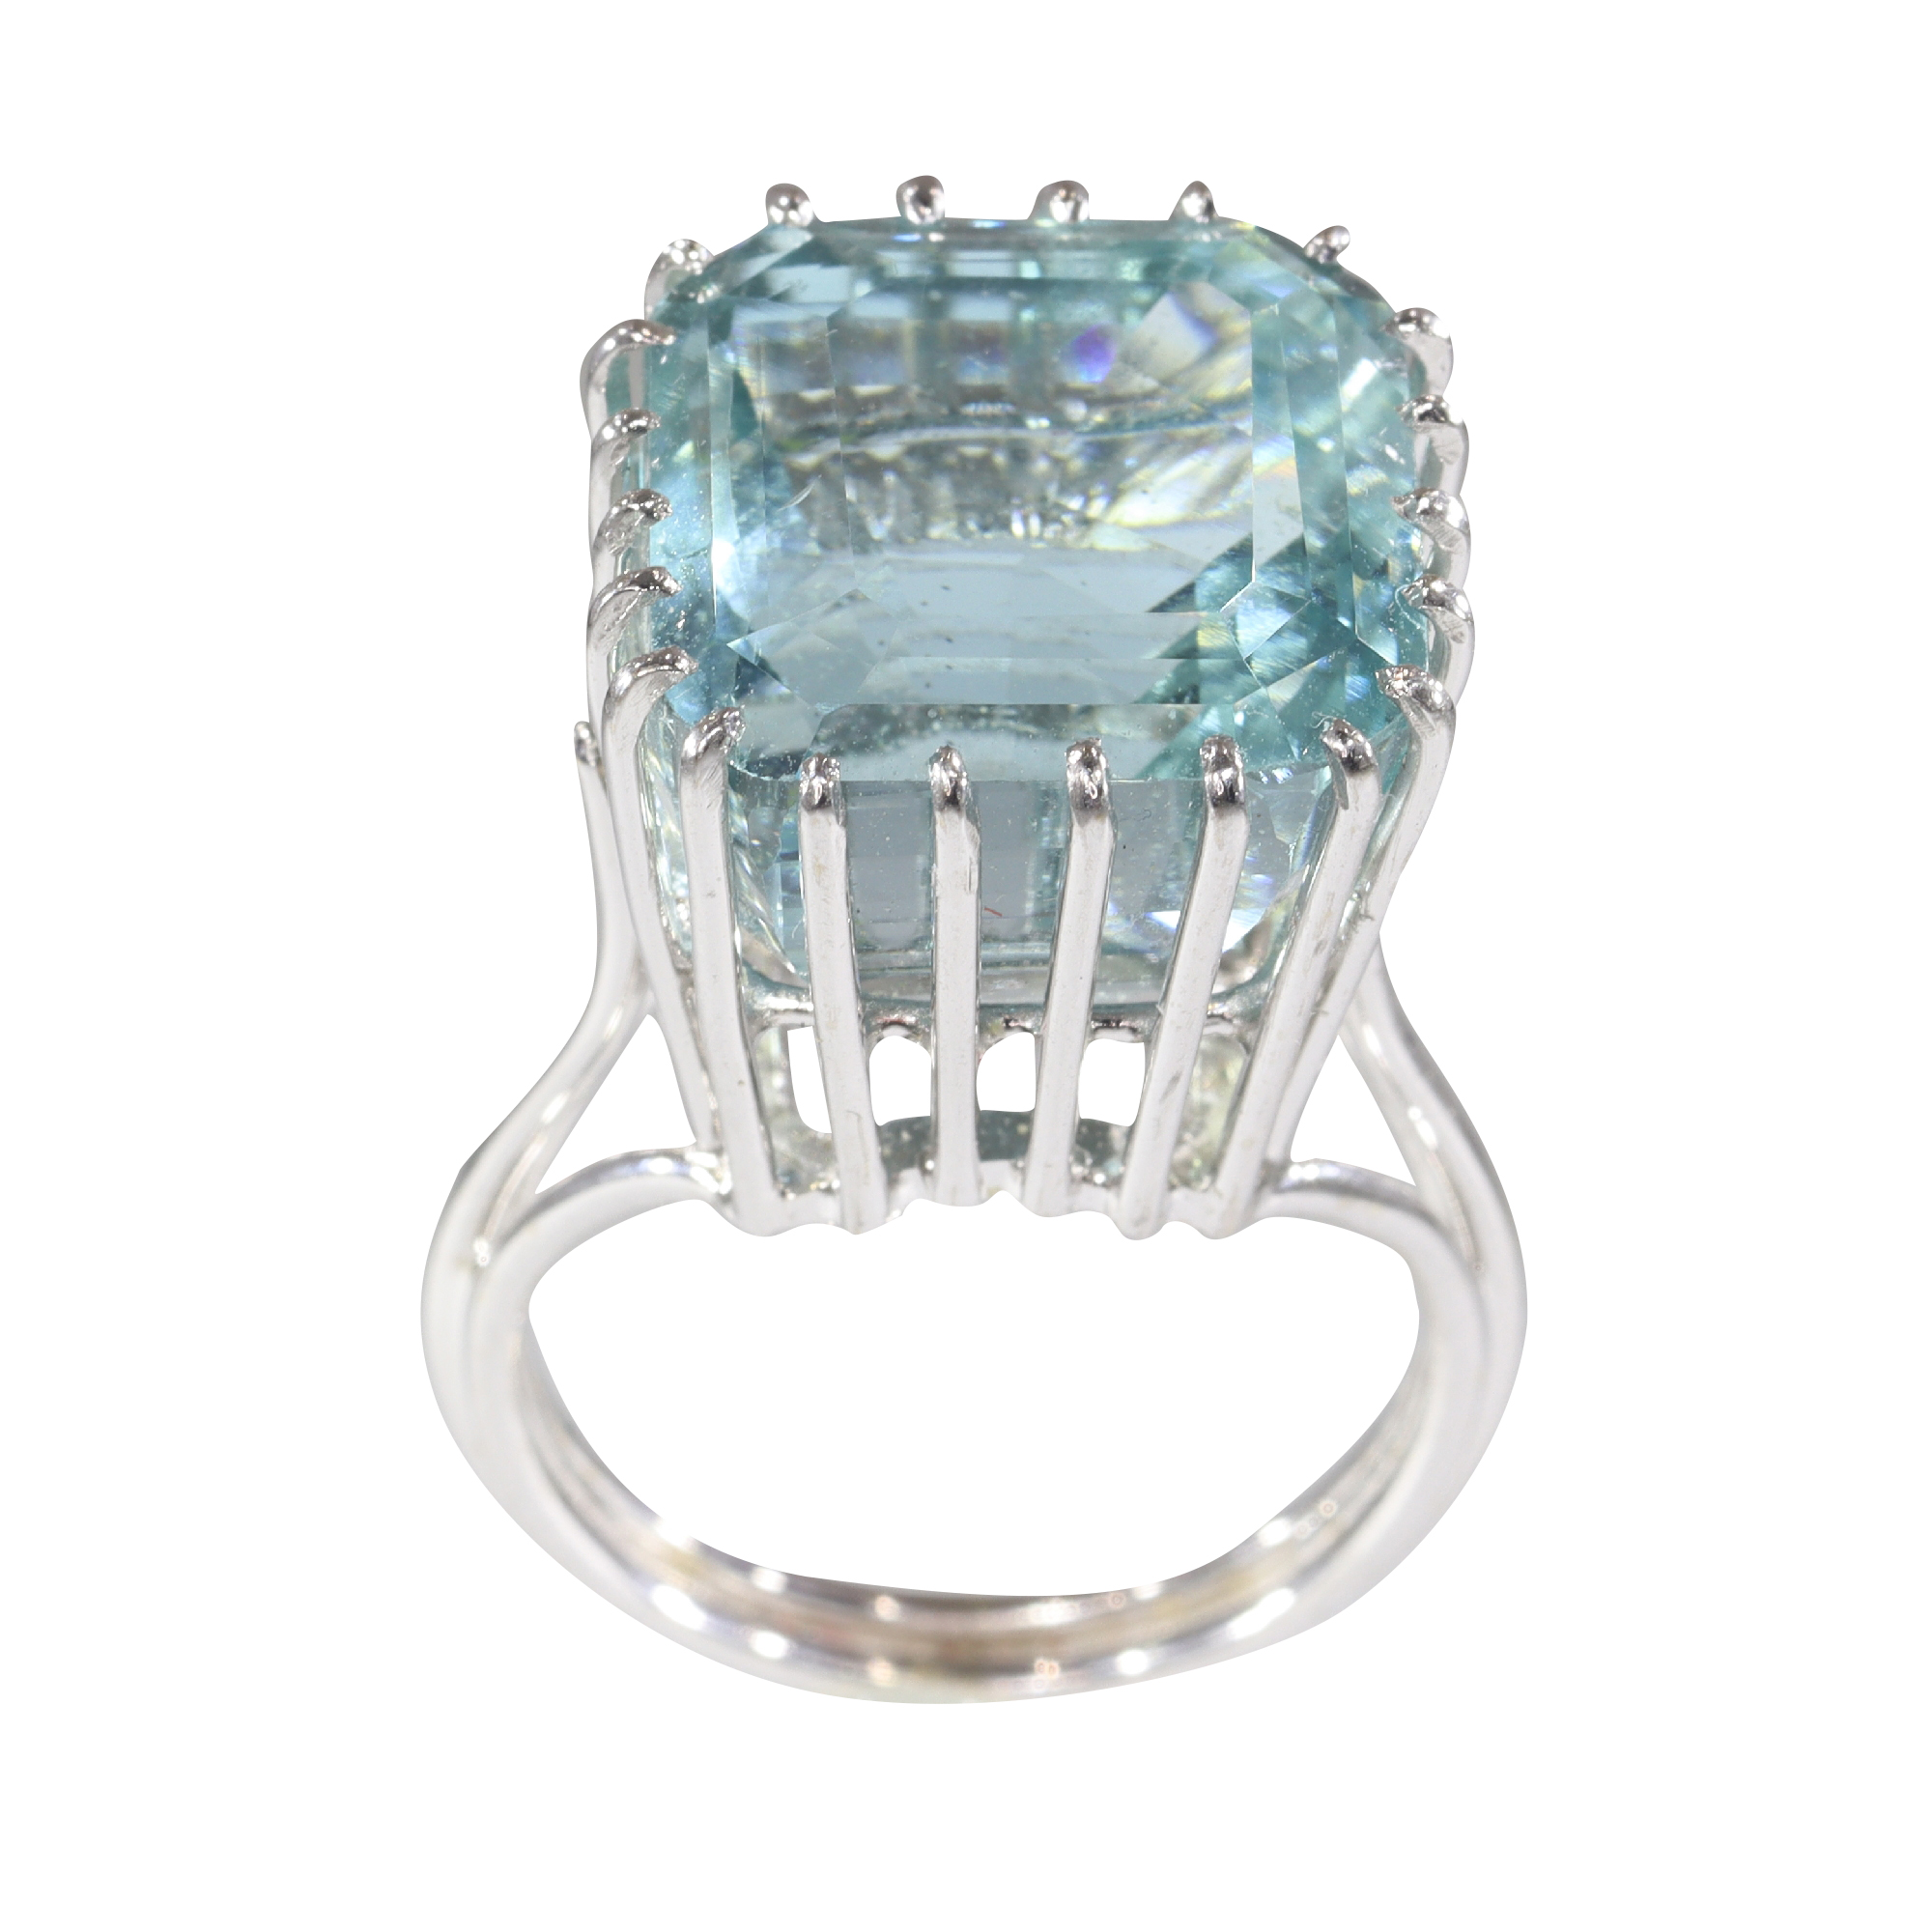 Elevated Elegance: A Vintage Fifties Aquamarine Ring